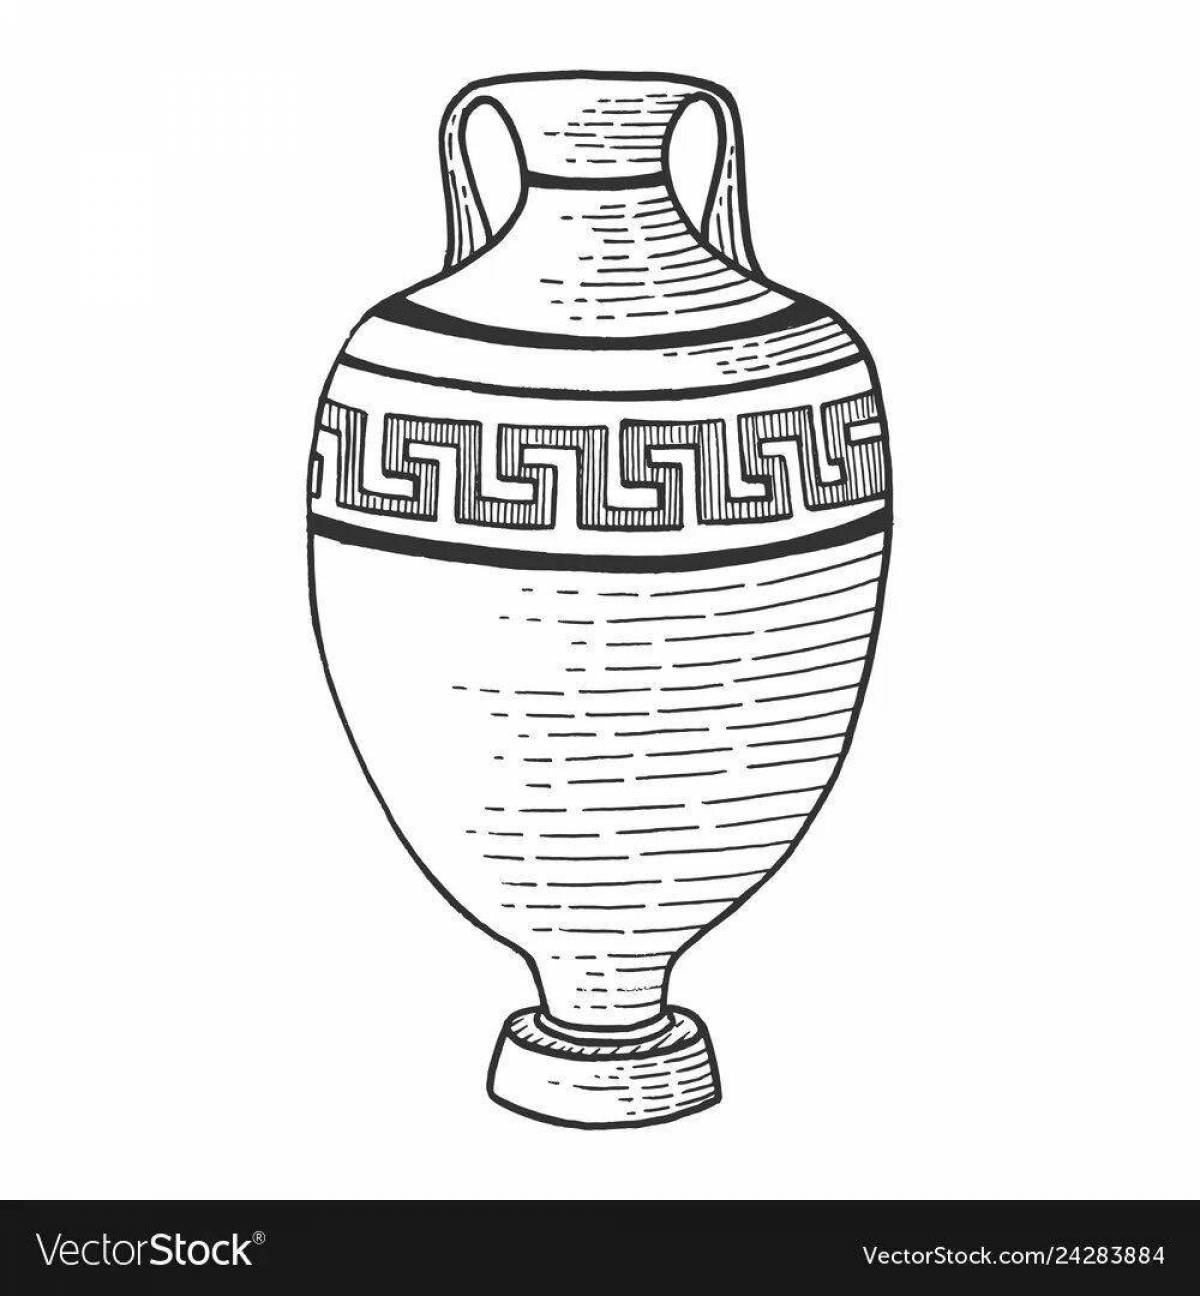 Luminous amphora coloring page